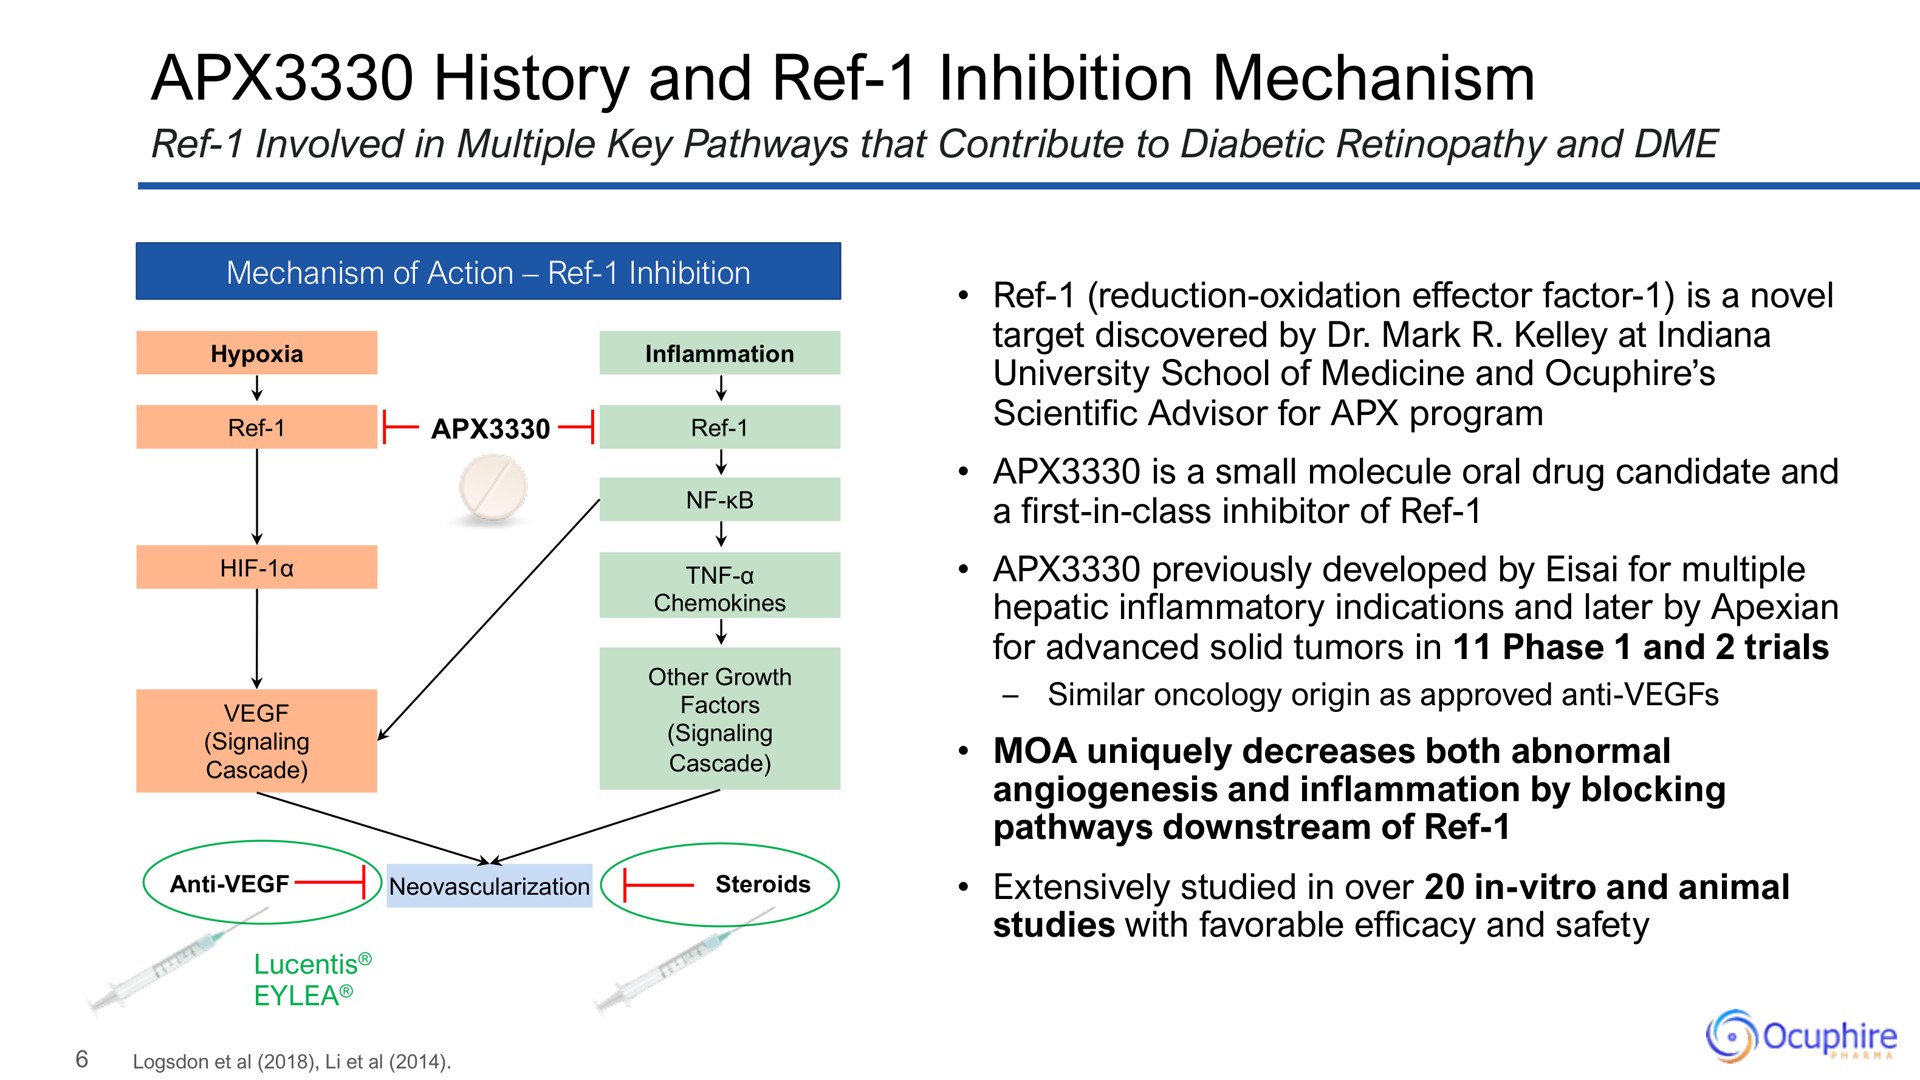 history and ref inhibition mechanism | Ocuphire Pharma